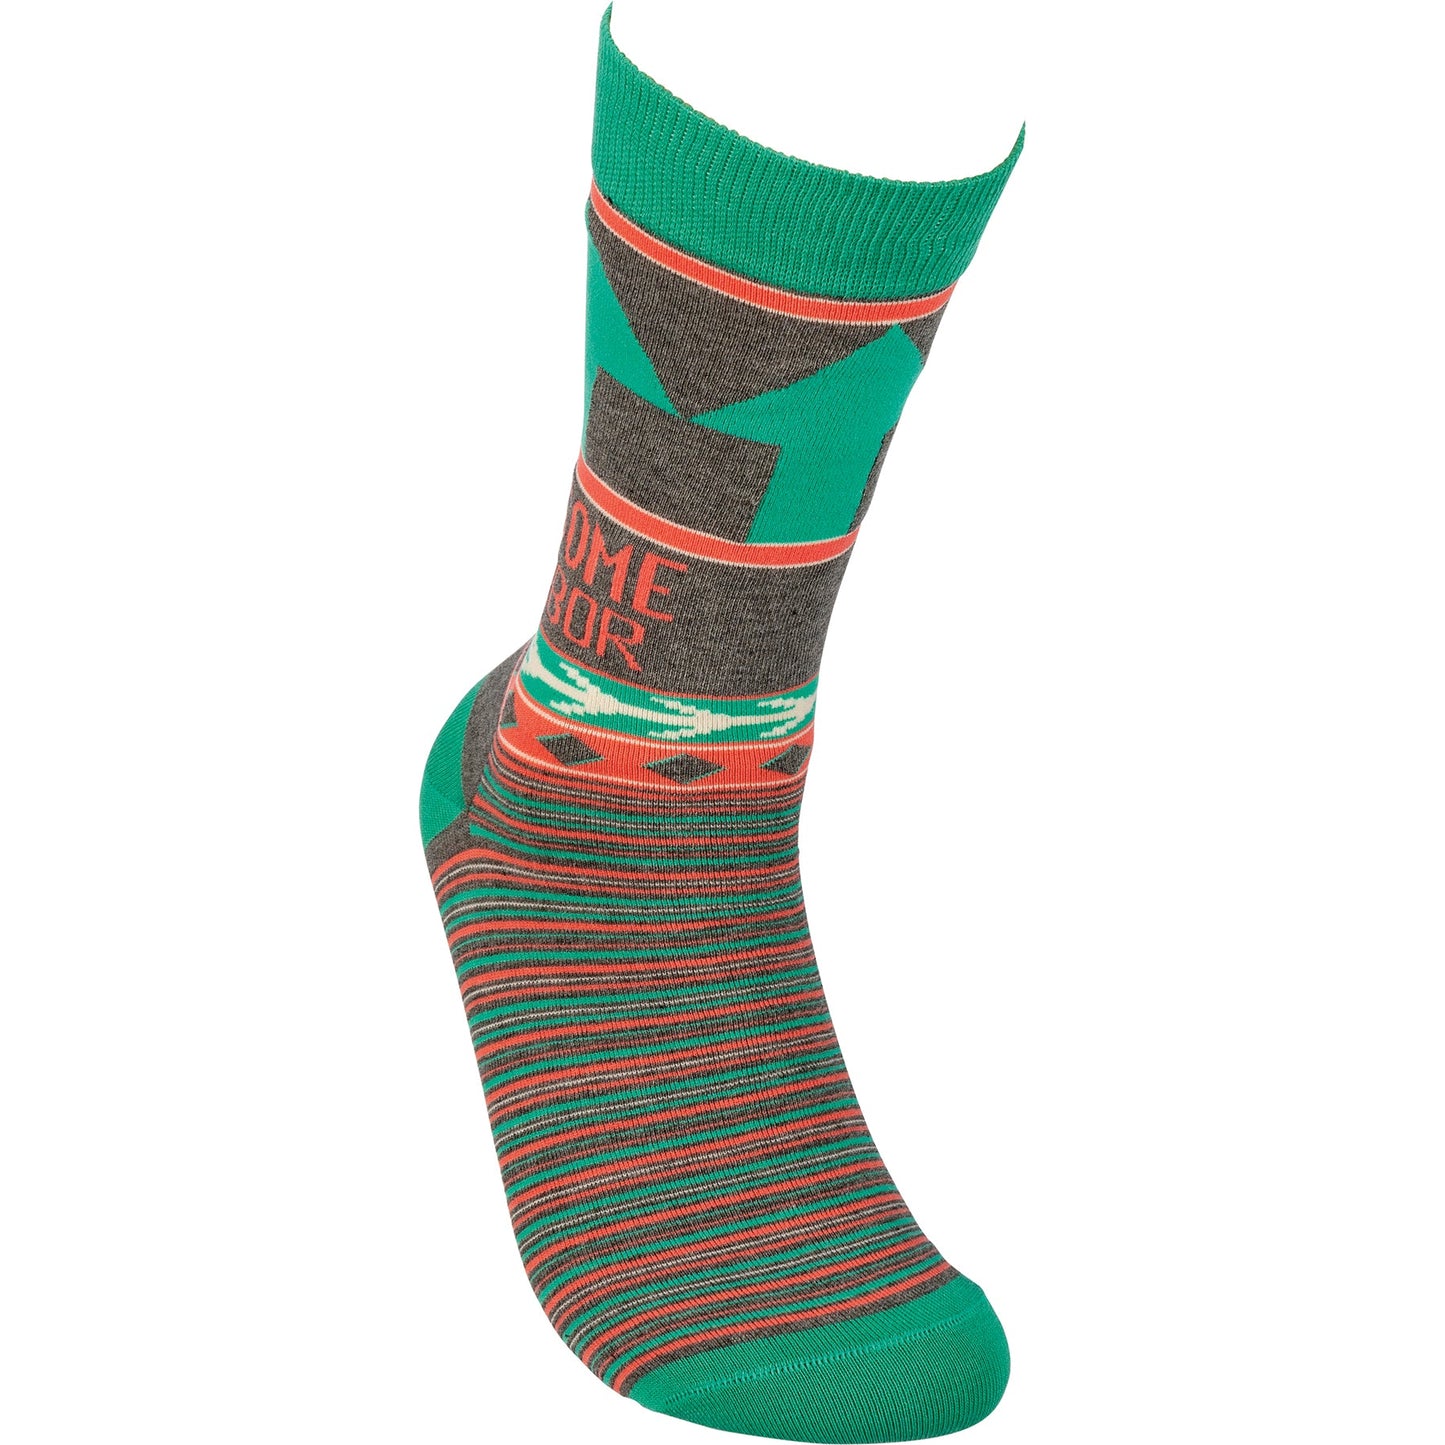 Awesome Neighbor Socks | Unisex Funny Gift Socks